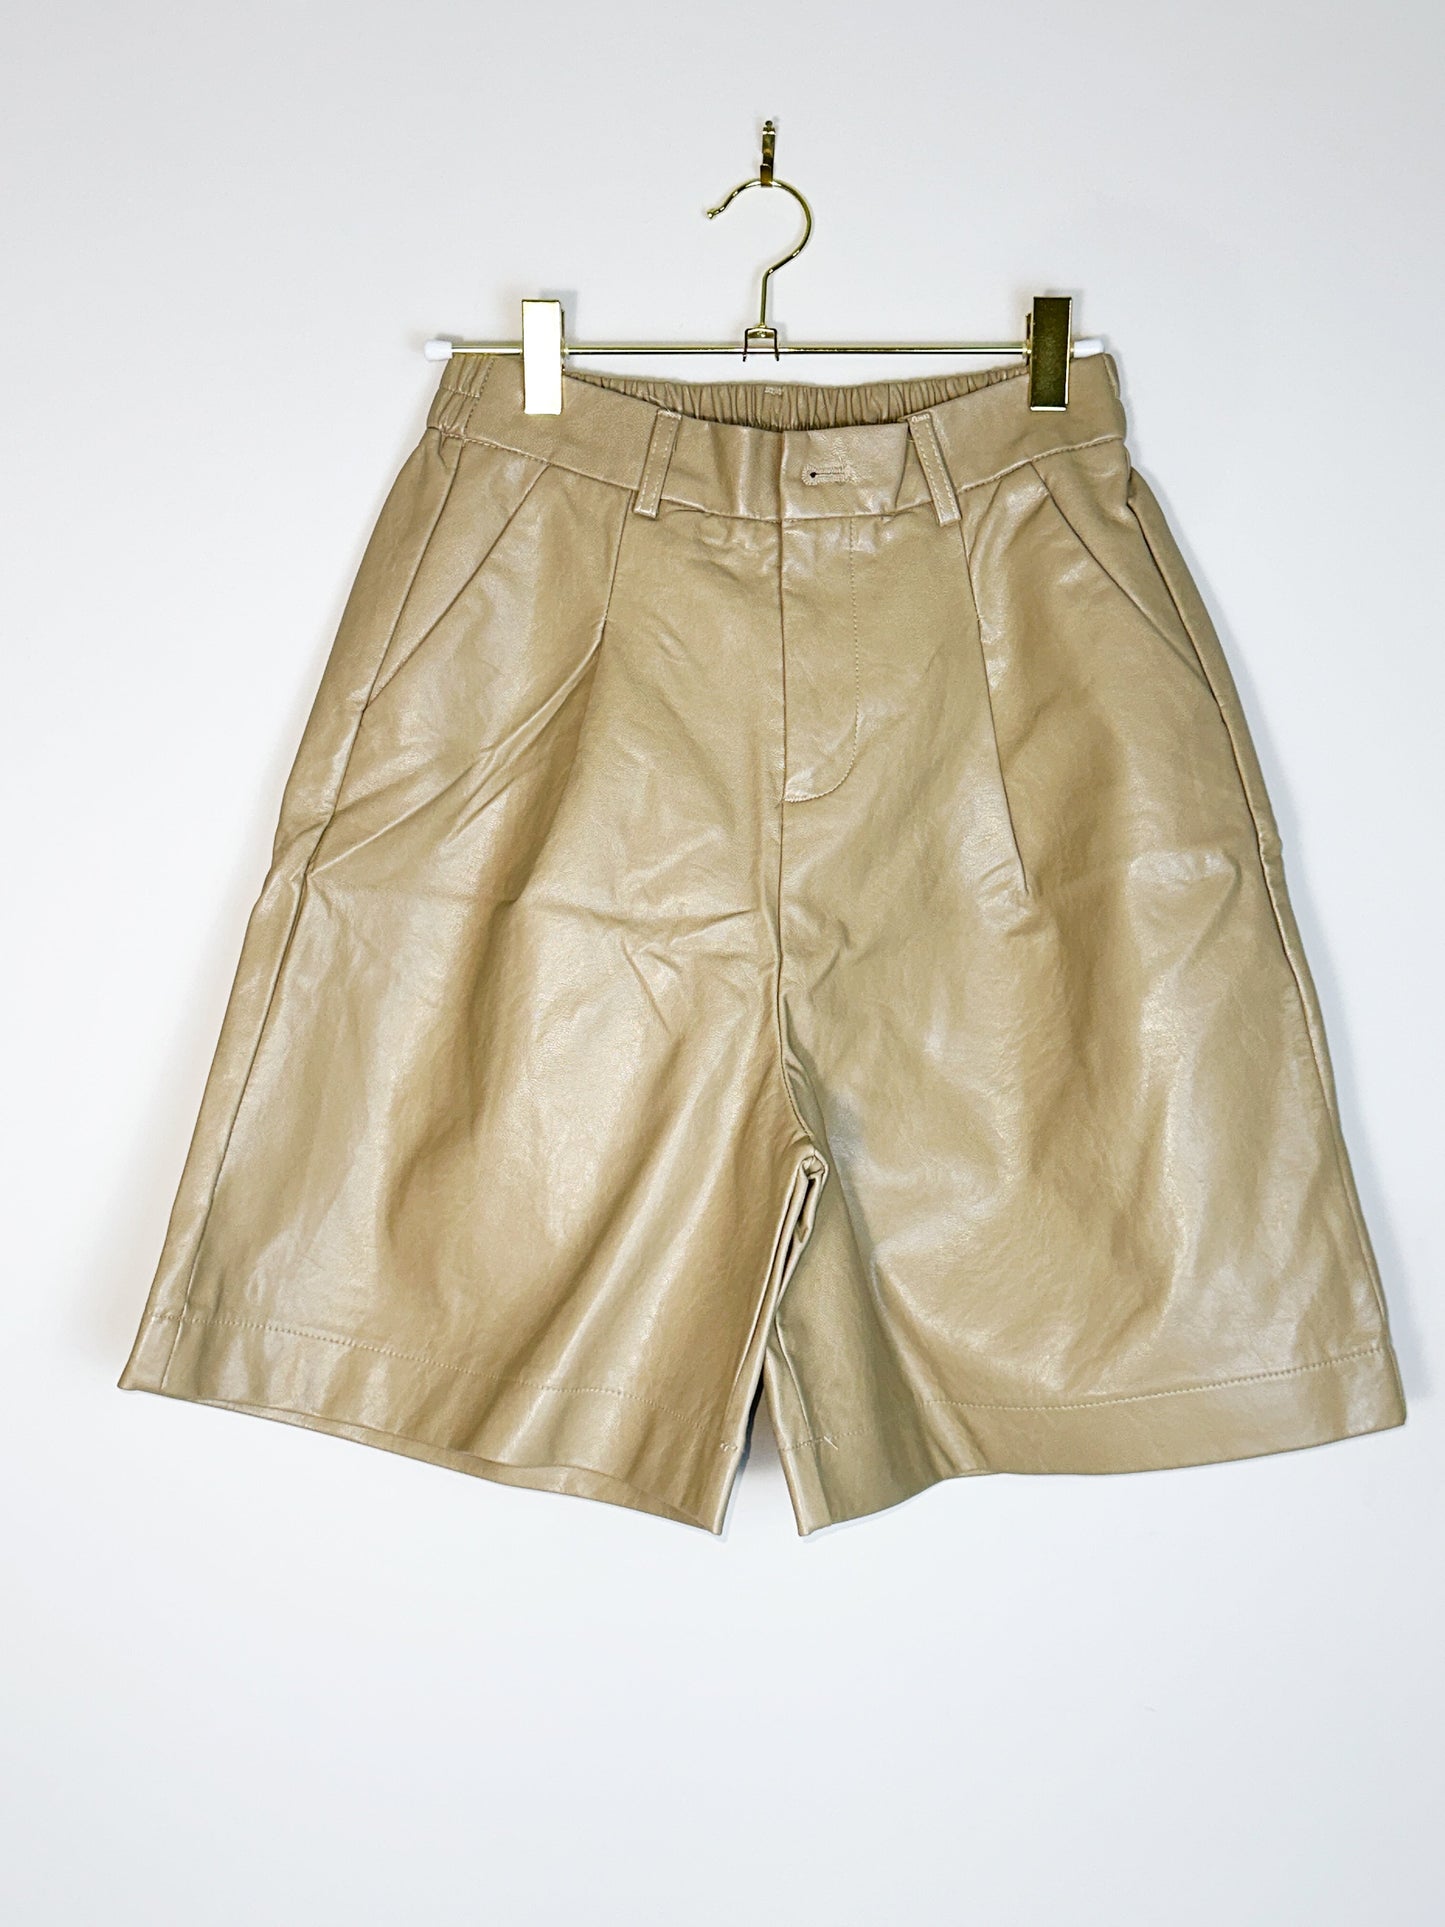 Fallon Women's Leather Shorts